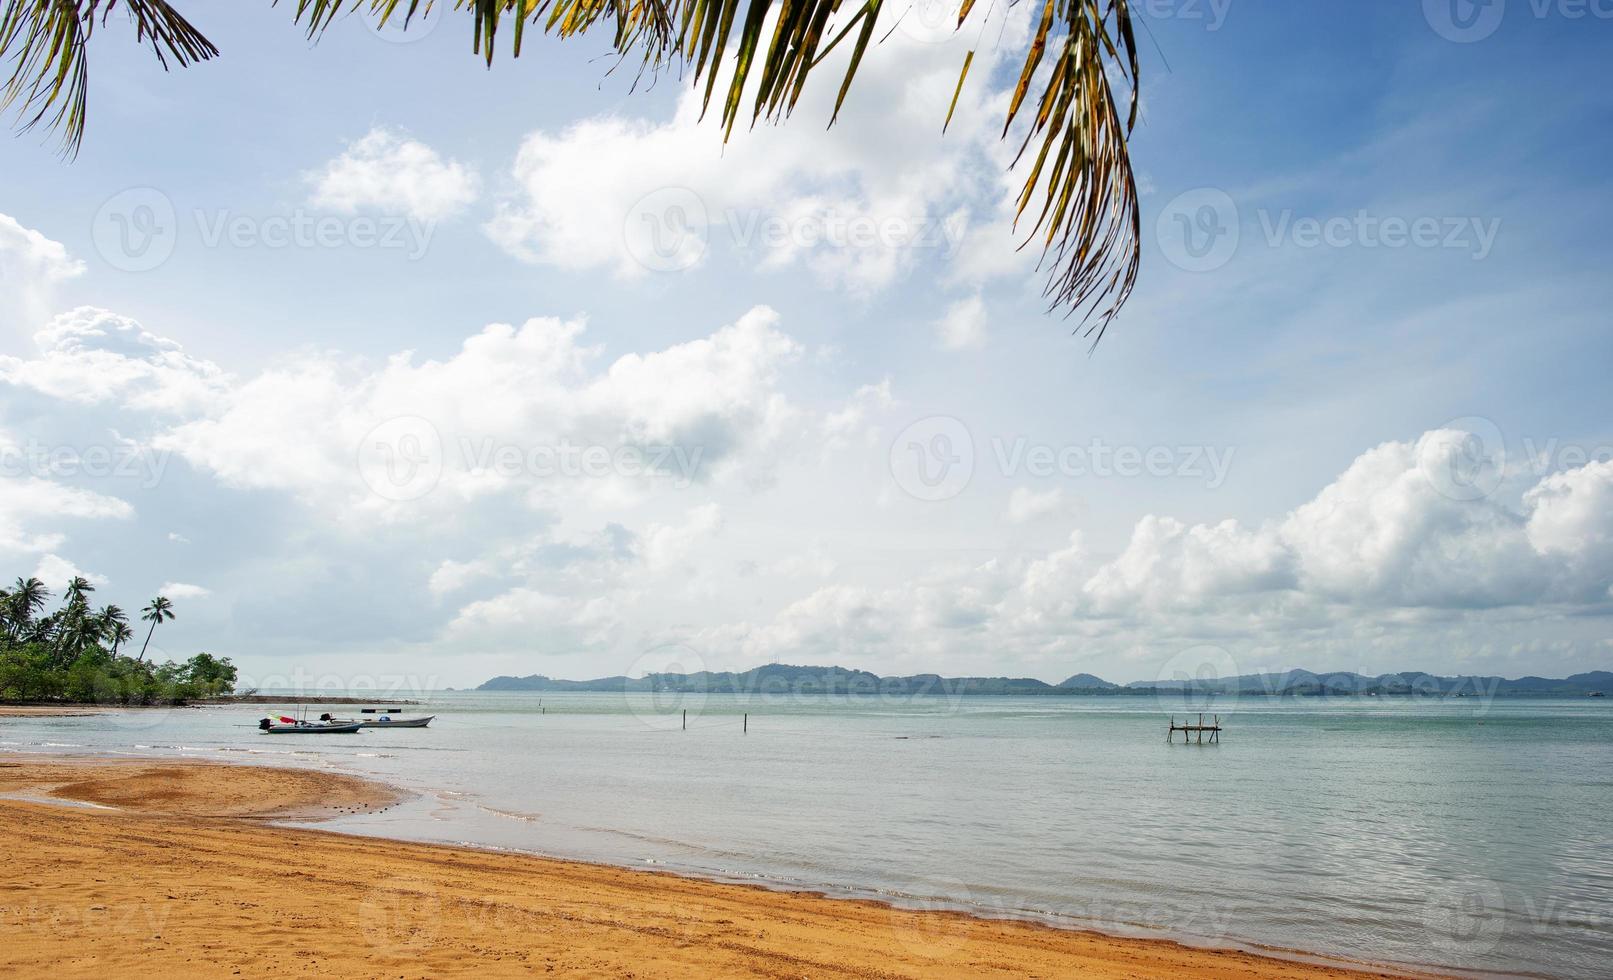 kokospalmen en zee, prachtige natuur foto